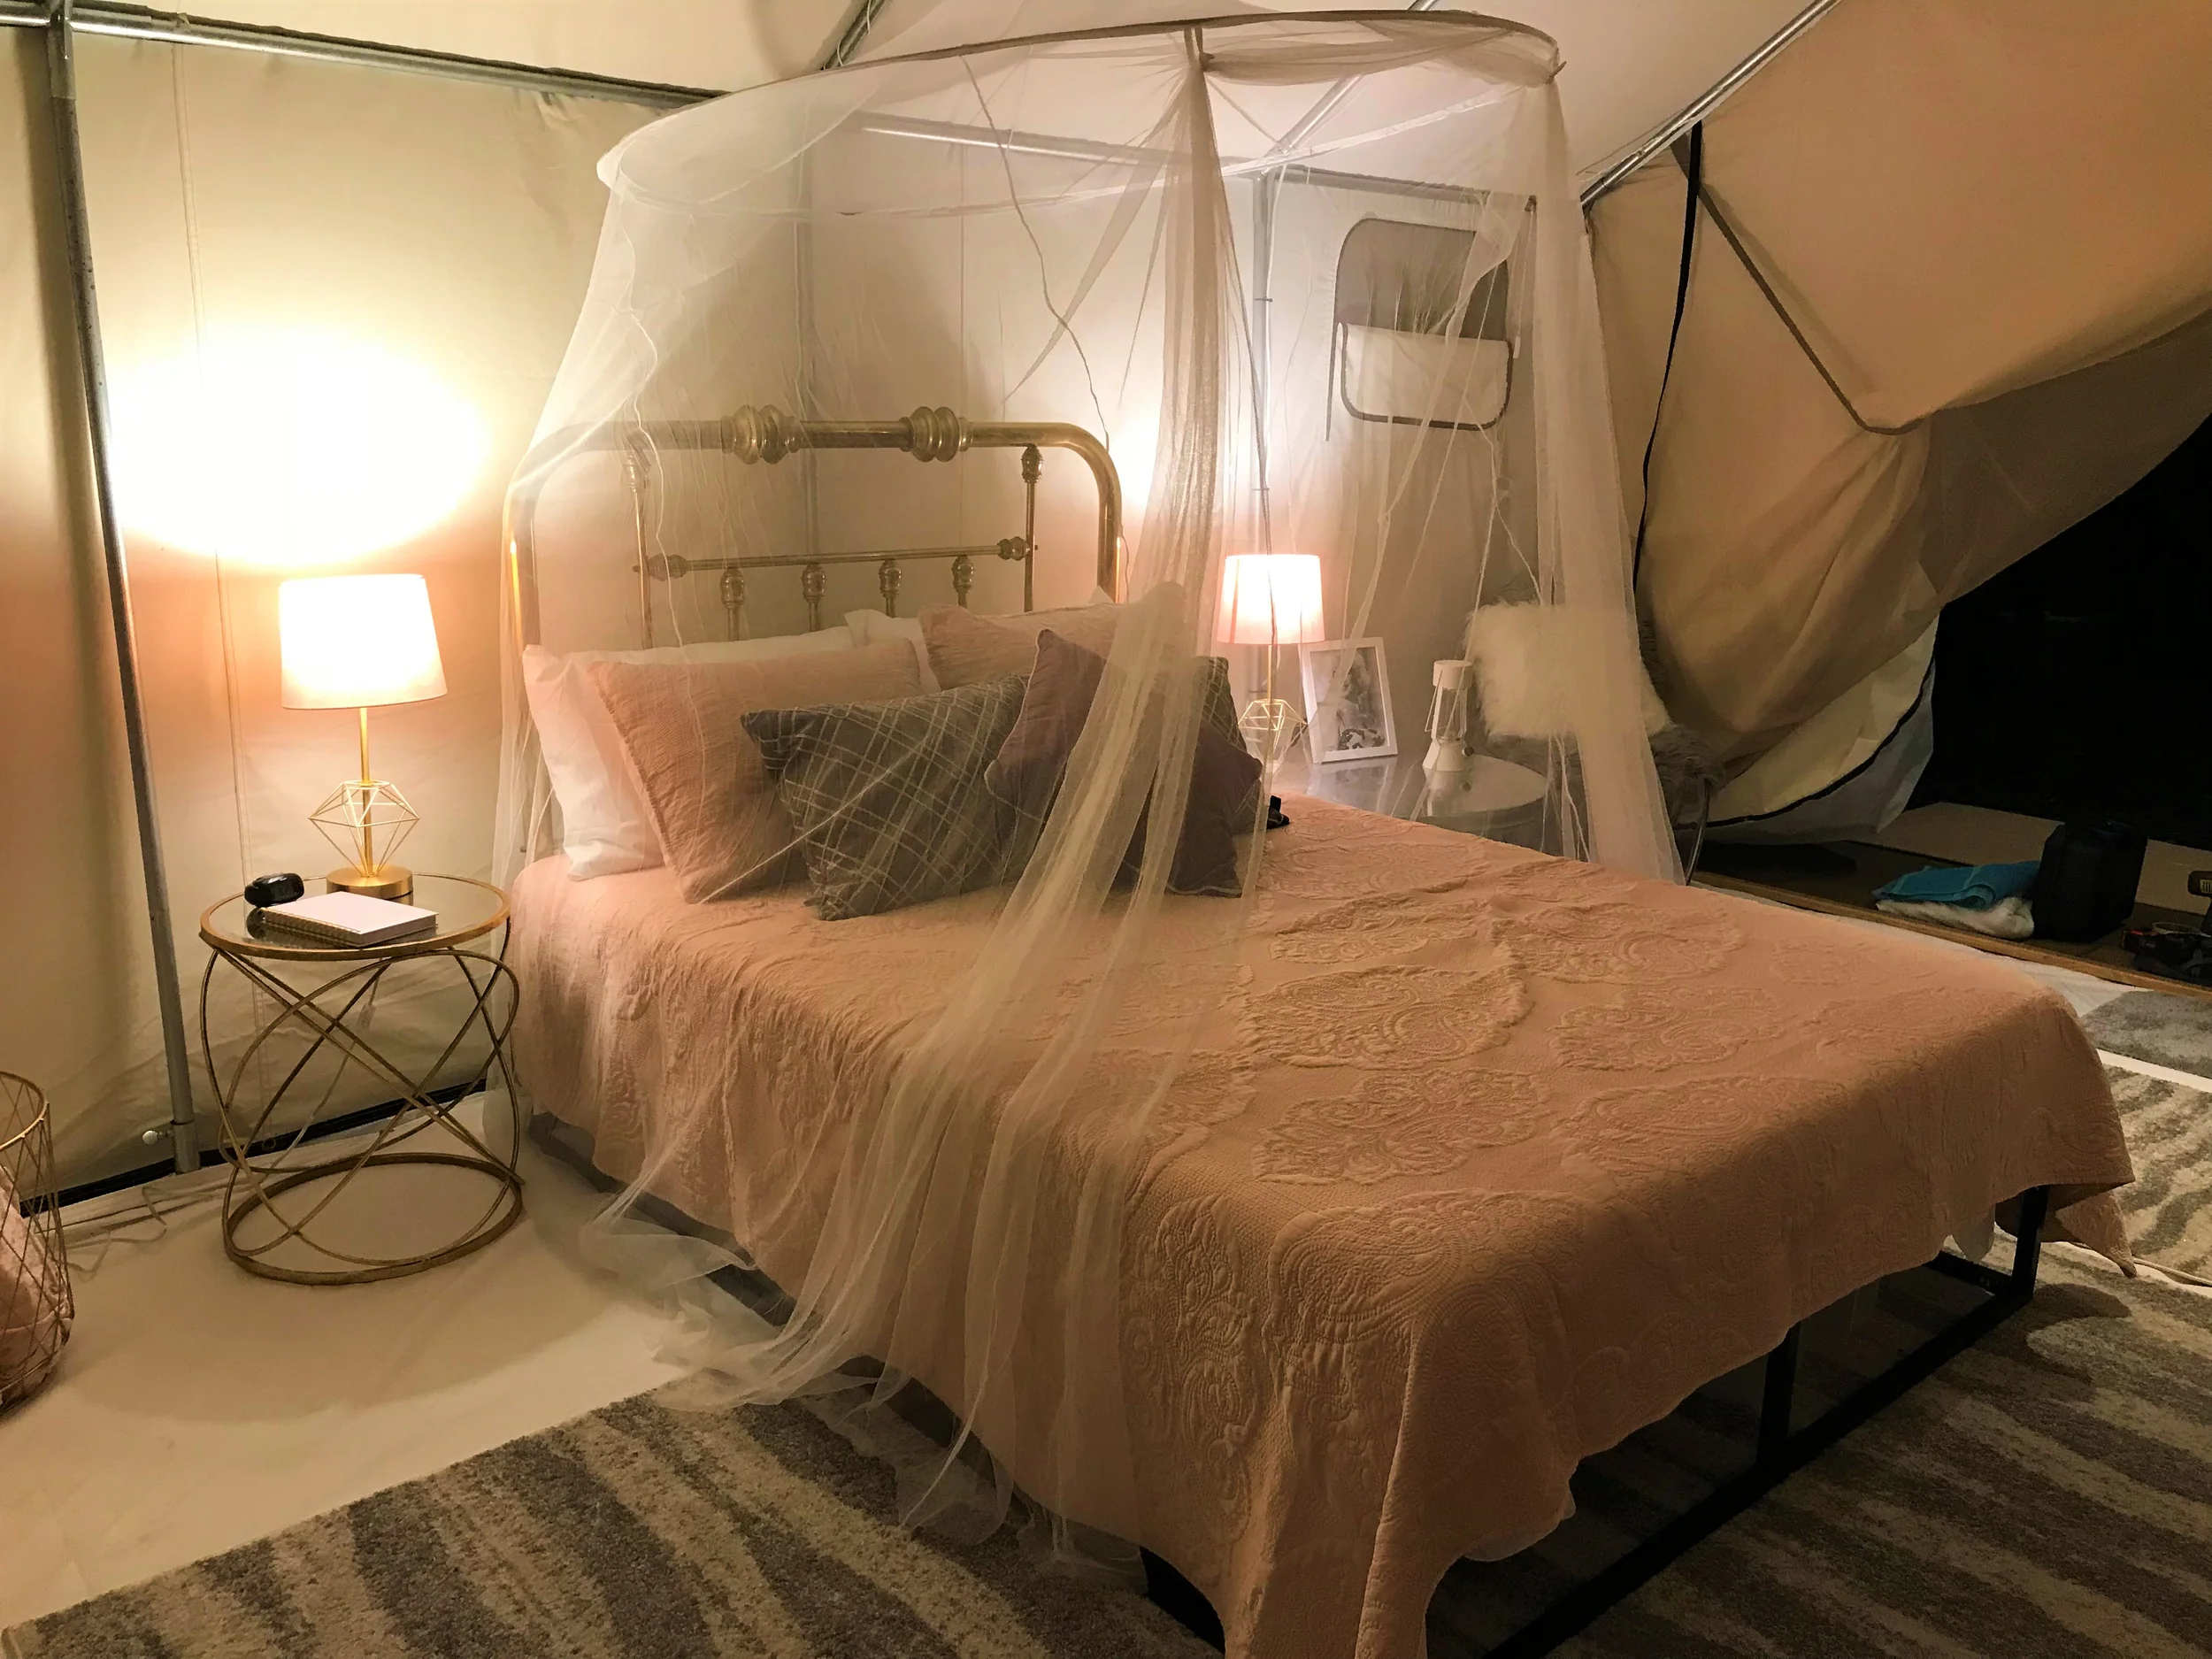 The Glam tent has warm romantic lighting